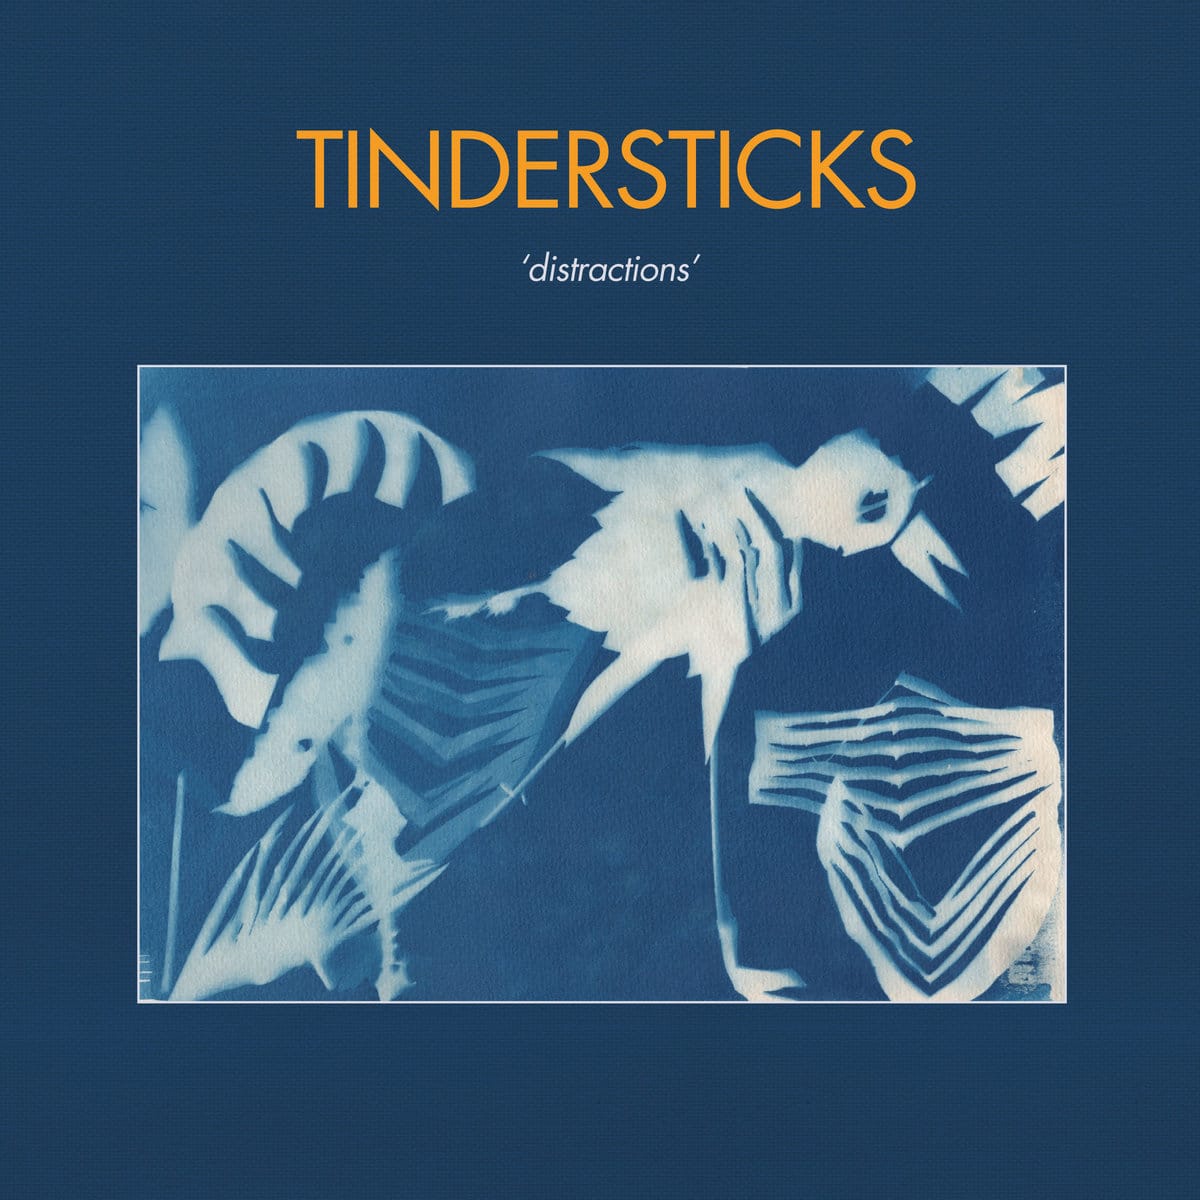 Tindersticks - Distractions (Ltd Blue vinyl) - SLANG50349X - CITY SLANG